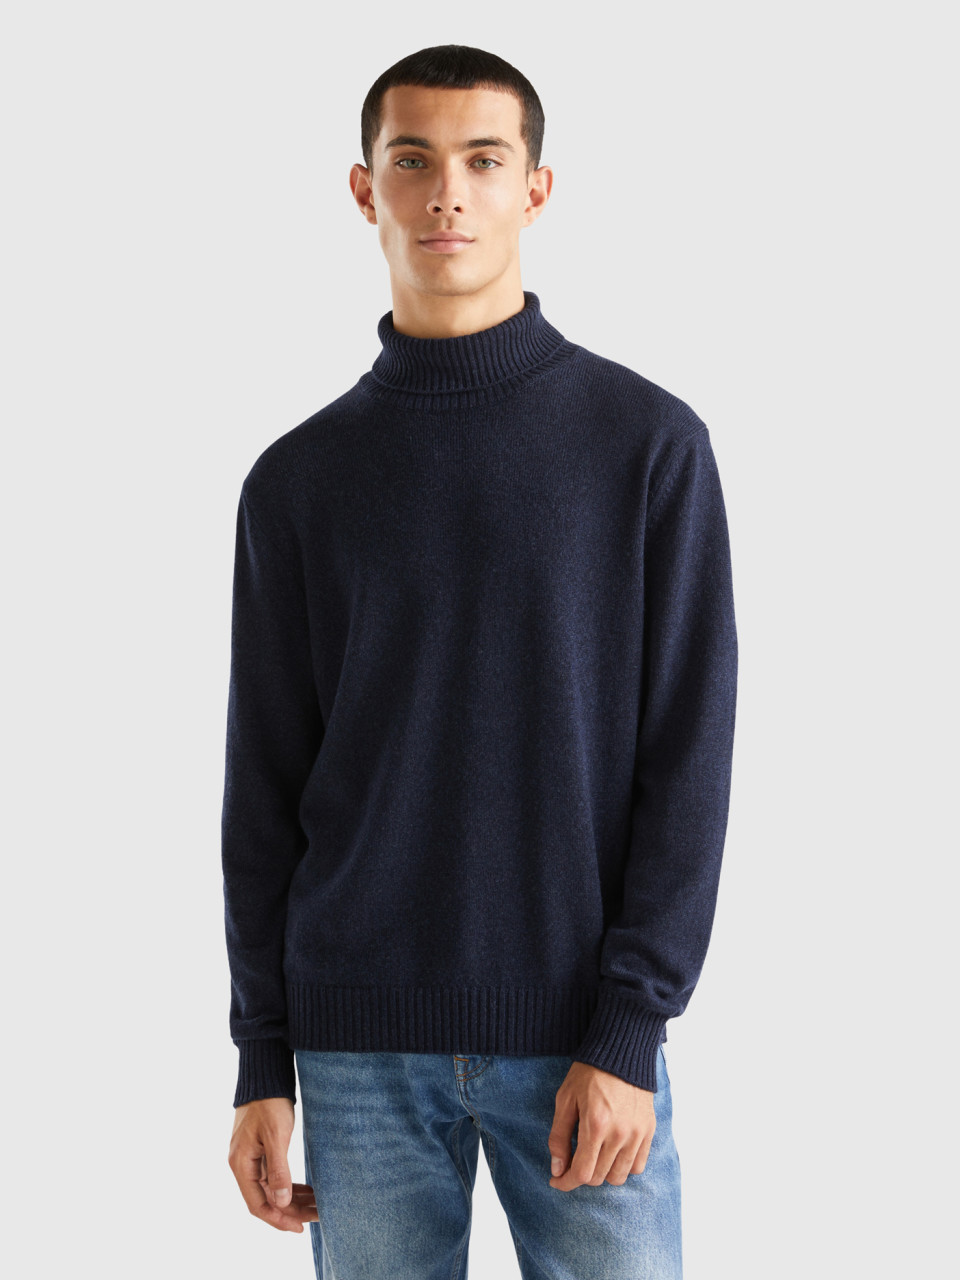 Benetton, Turtleneck Sweater In Cashmere And Wool Blend, Dark Blue, Men